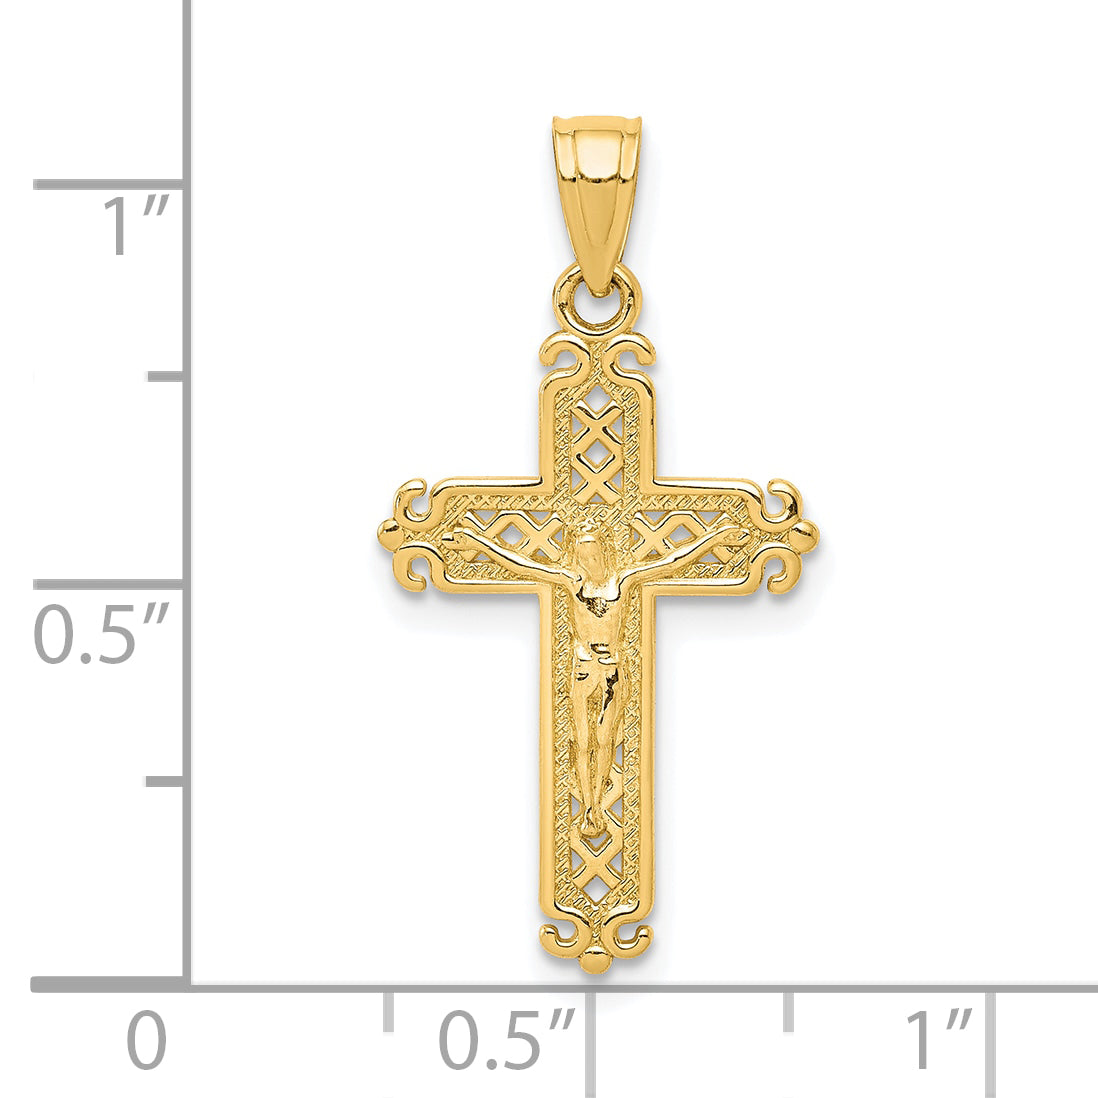 10k Crucifix Pendant